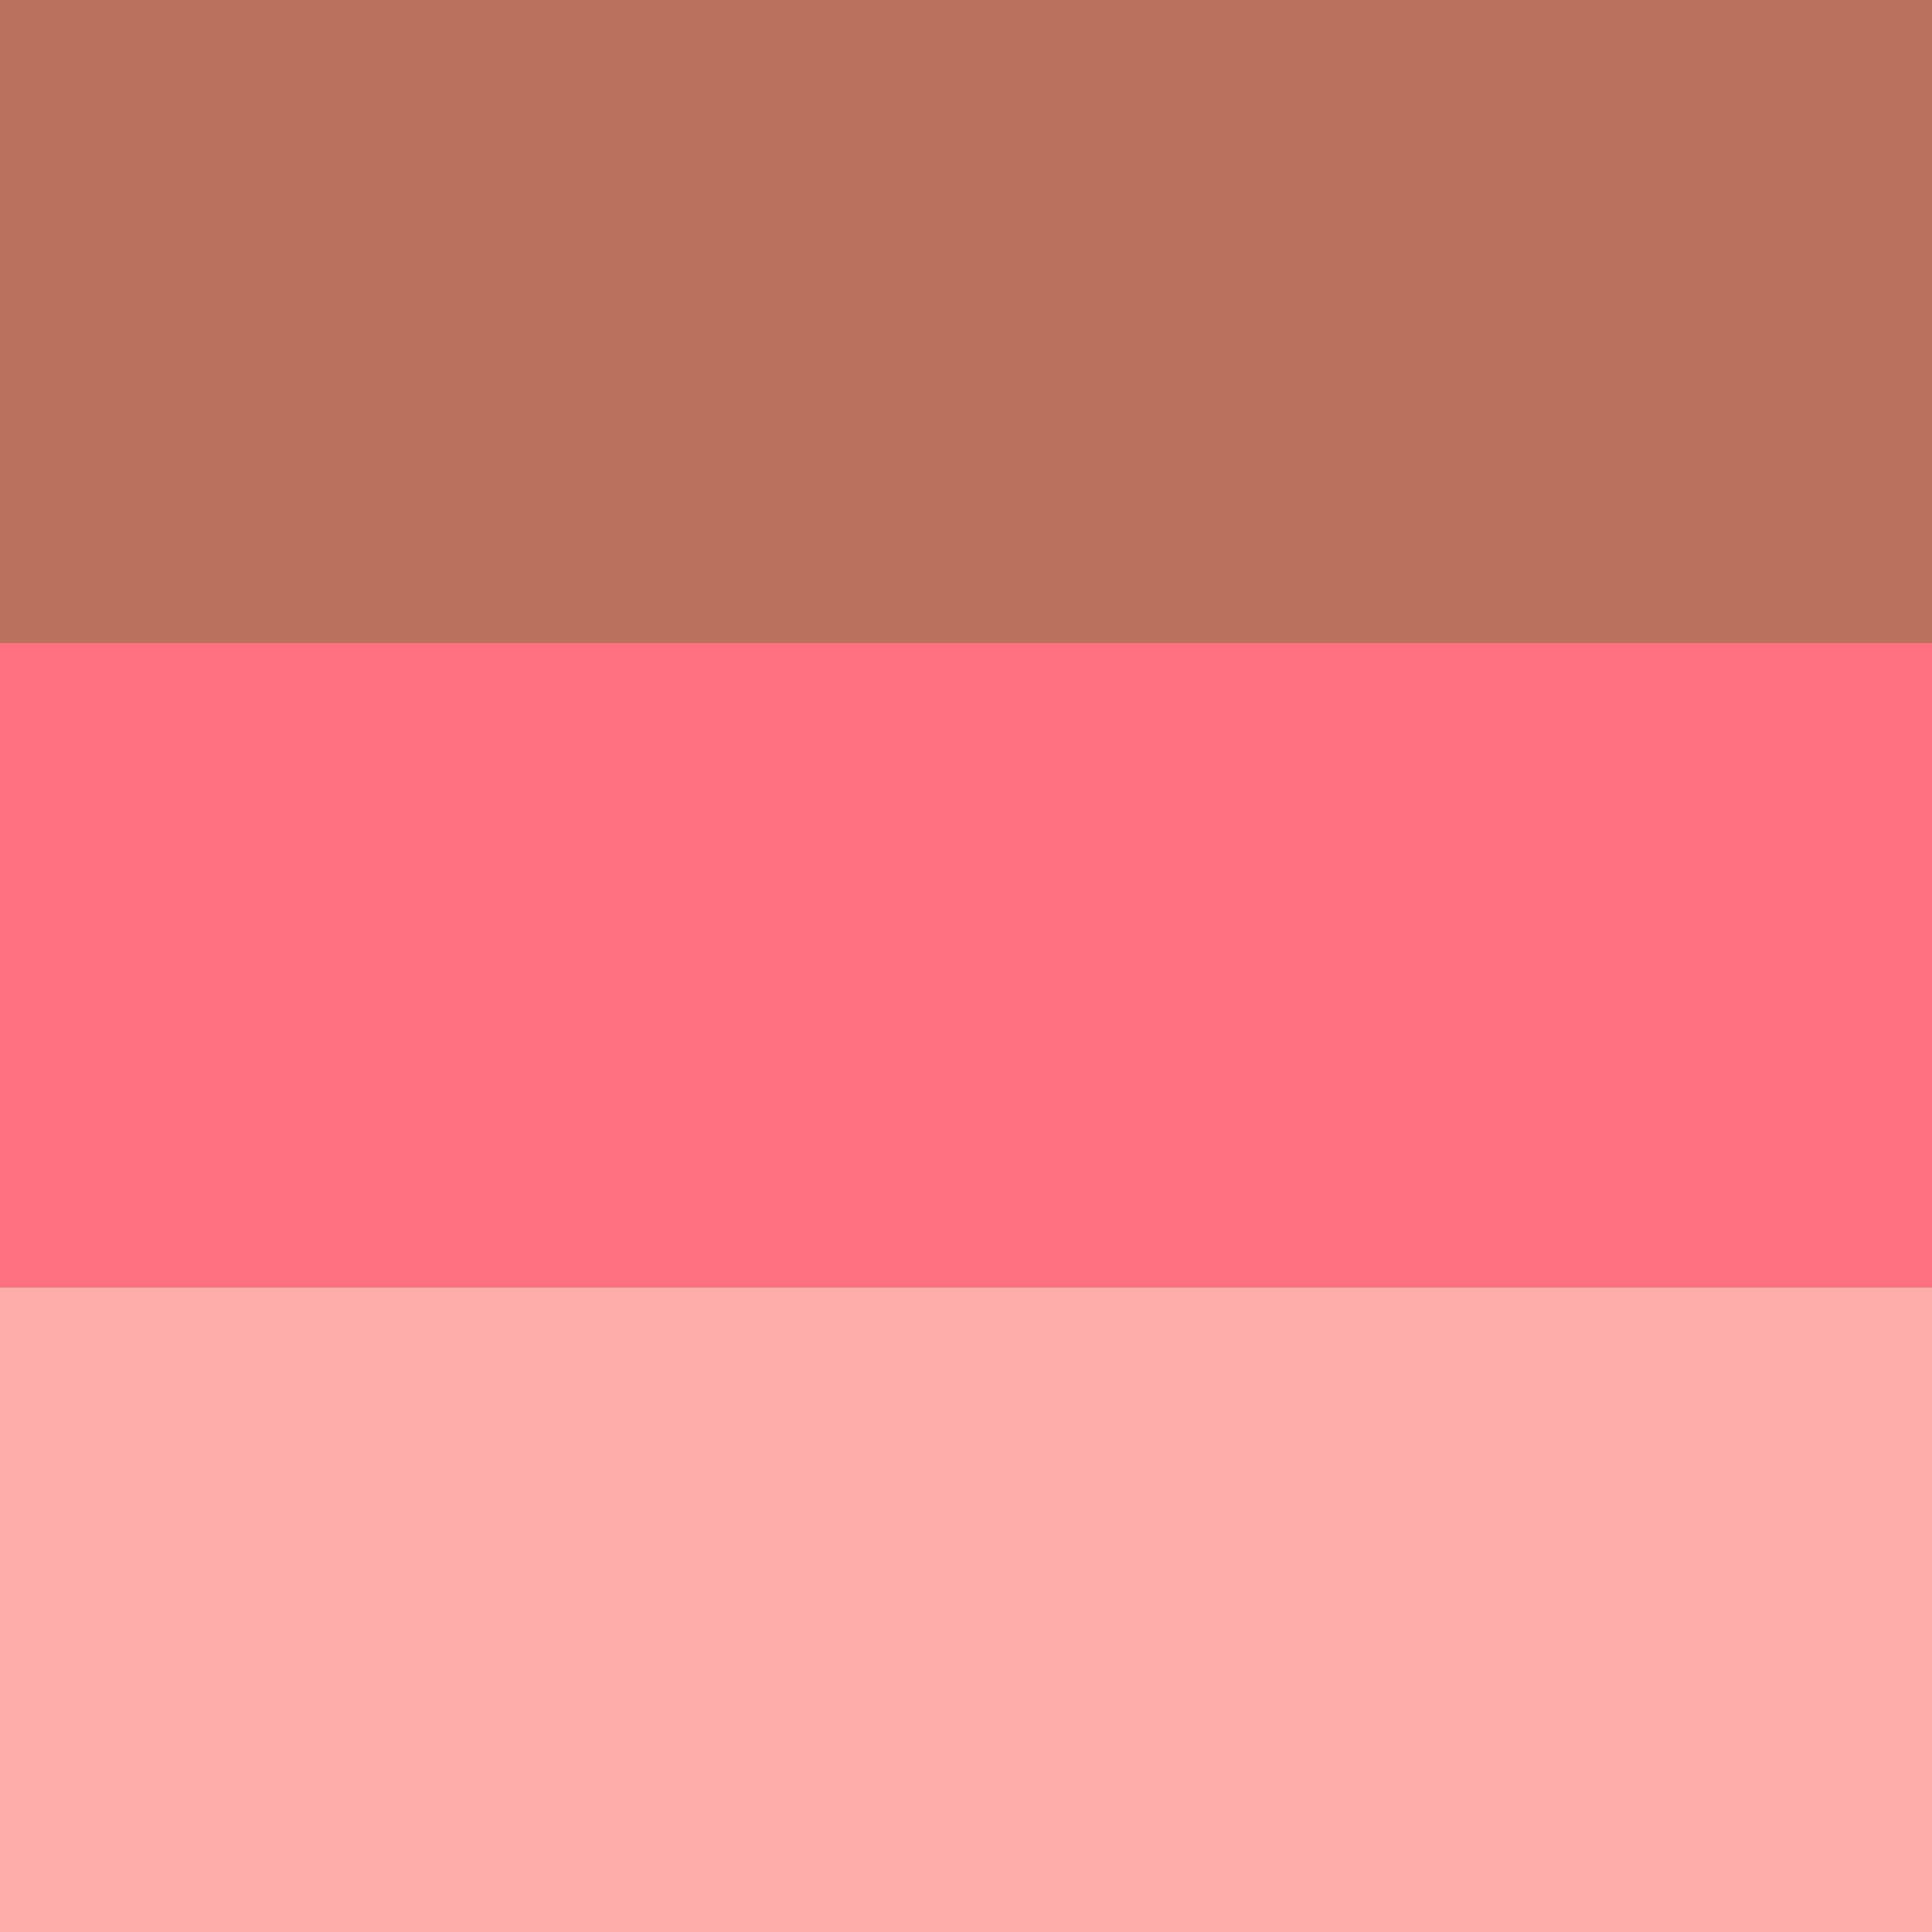 003 - Pink